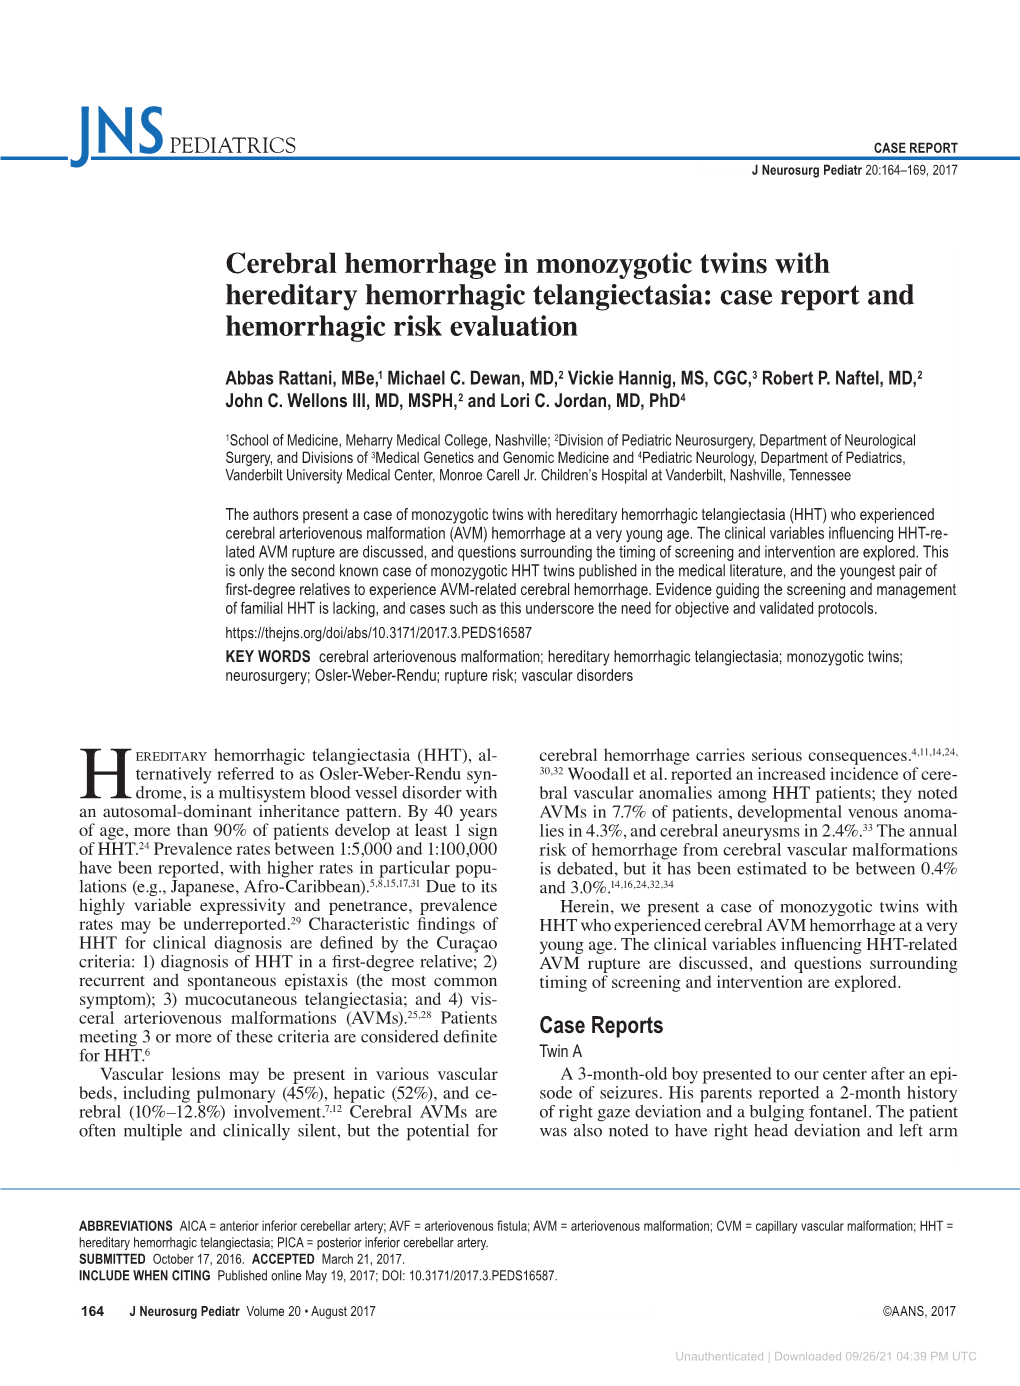 Cerebral Hemorrhage in Monozygotic Twins with Hereditary Hemorrhagic Telangiectasia: Case Report and Hemorrhagic Risk Evaluation